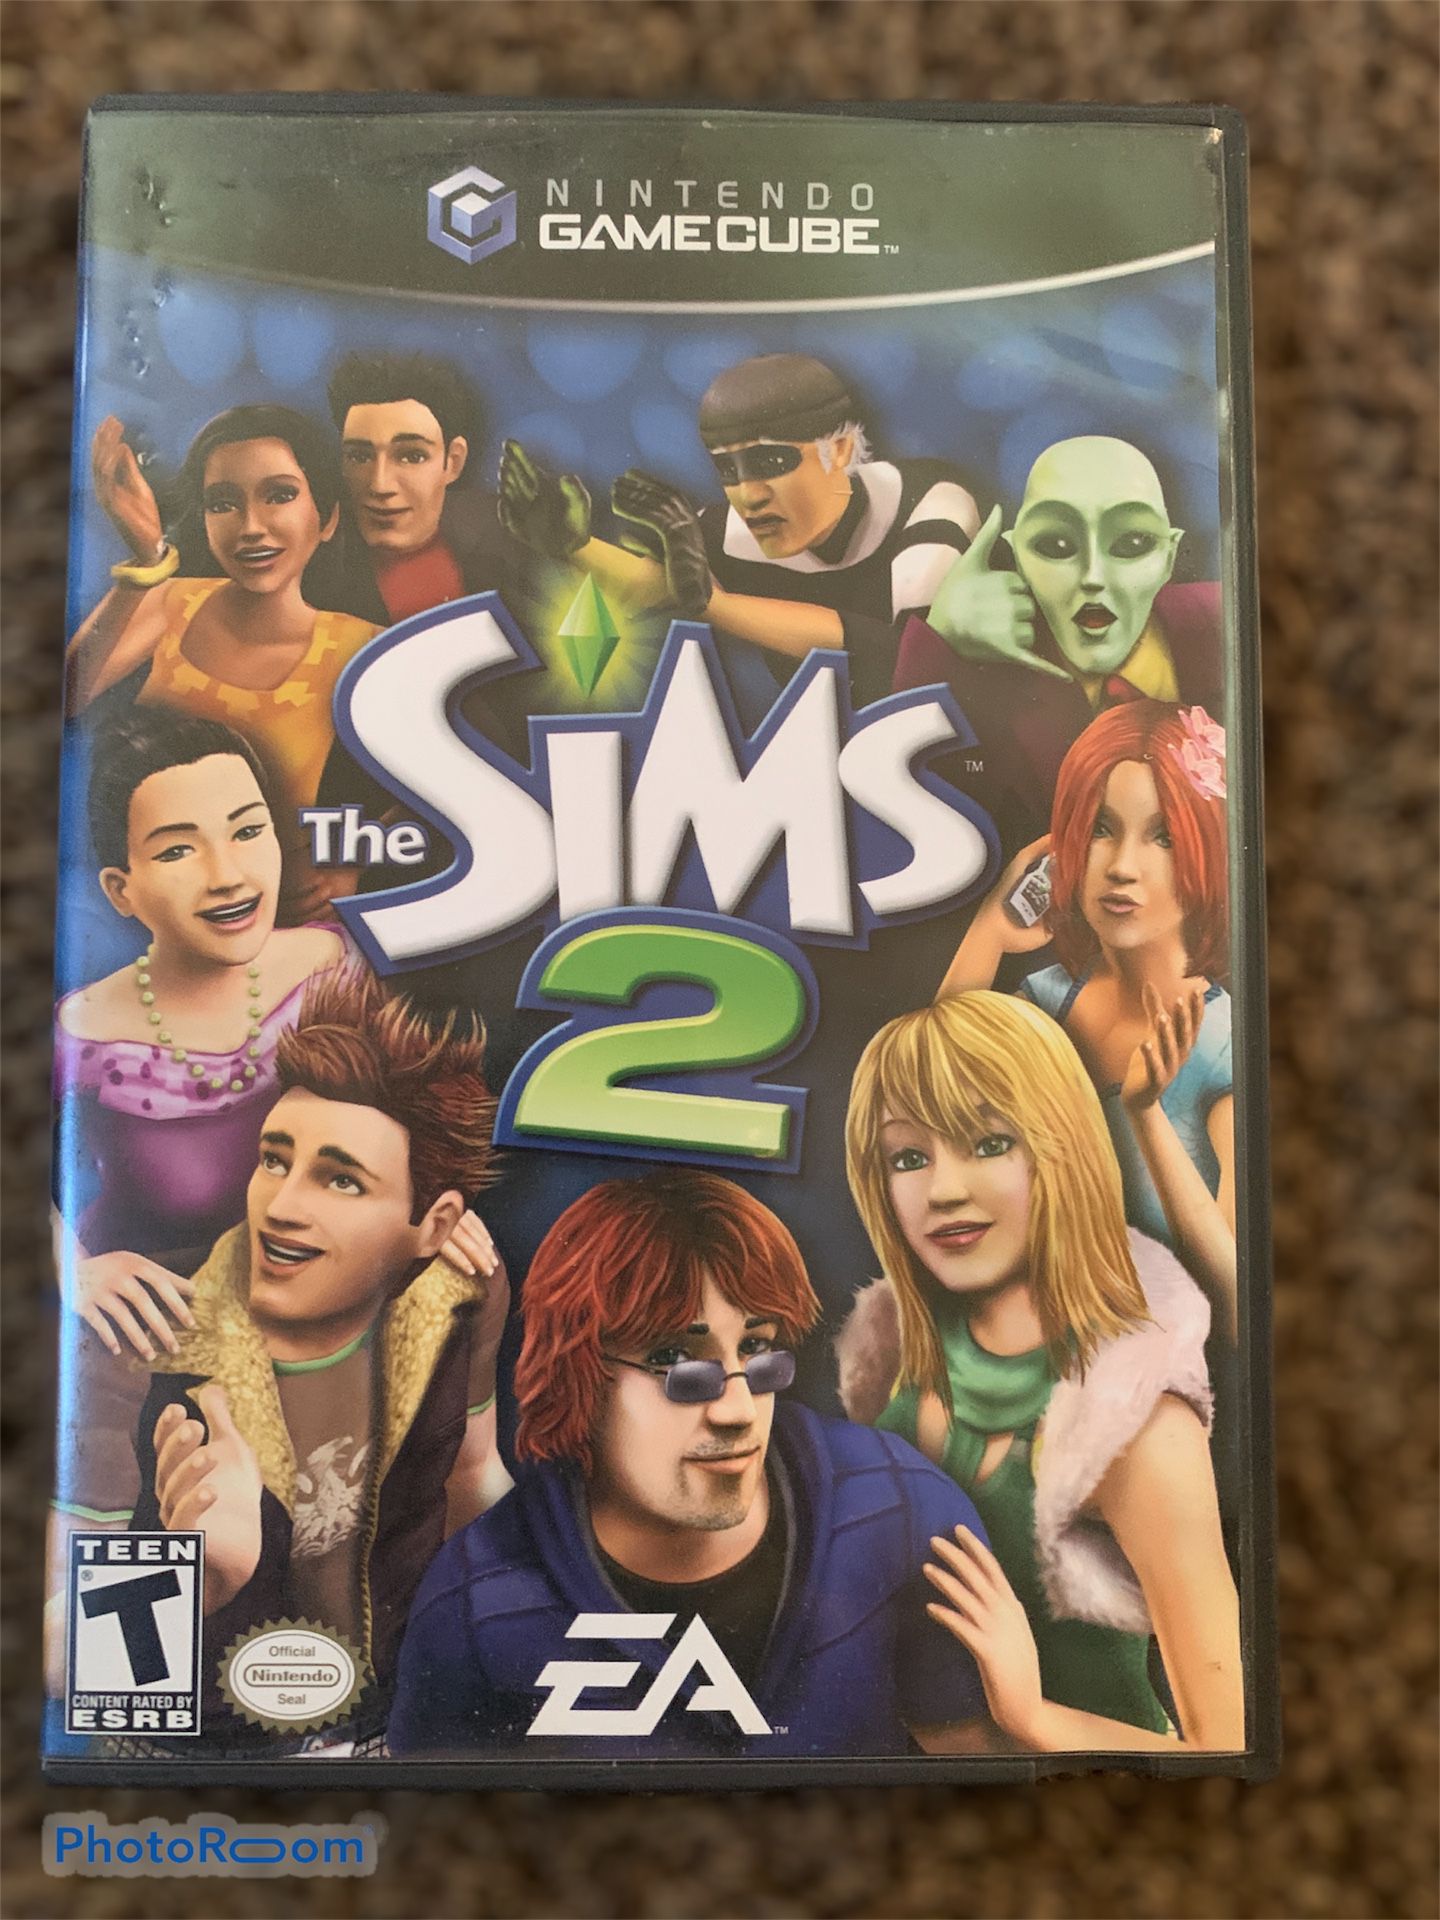 Nintendo Gamecube The Sims 2